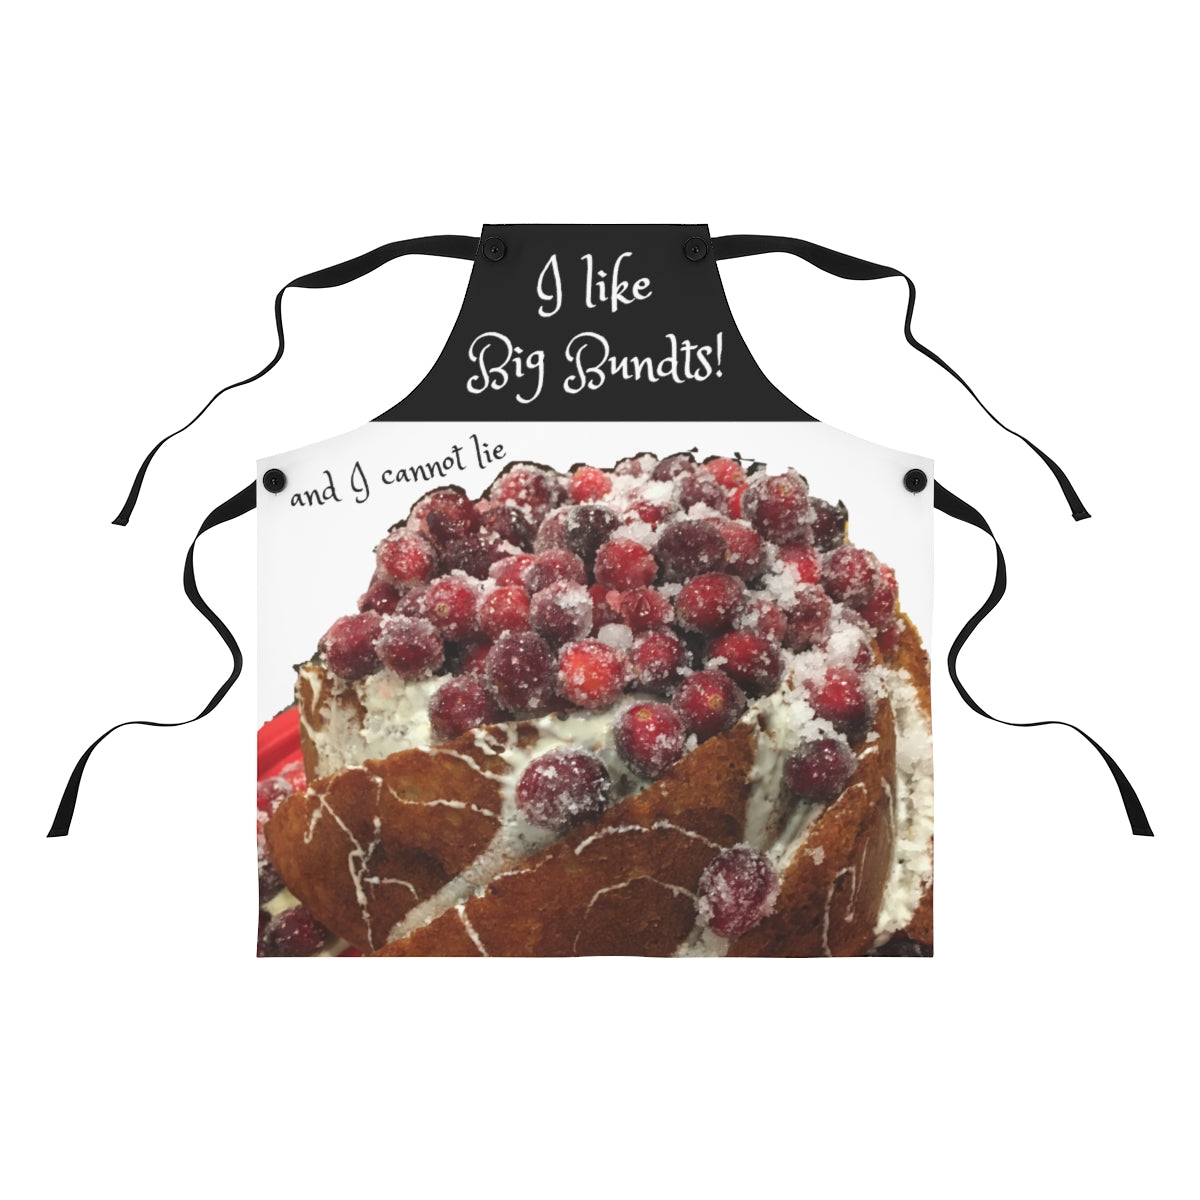 I Like Big Bundts!  and I cannot lie  Kitchen Apron with  Cranberry Bundt Cake